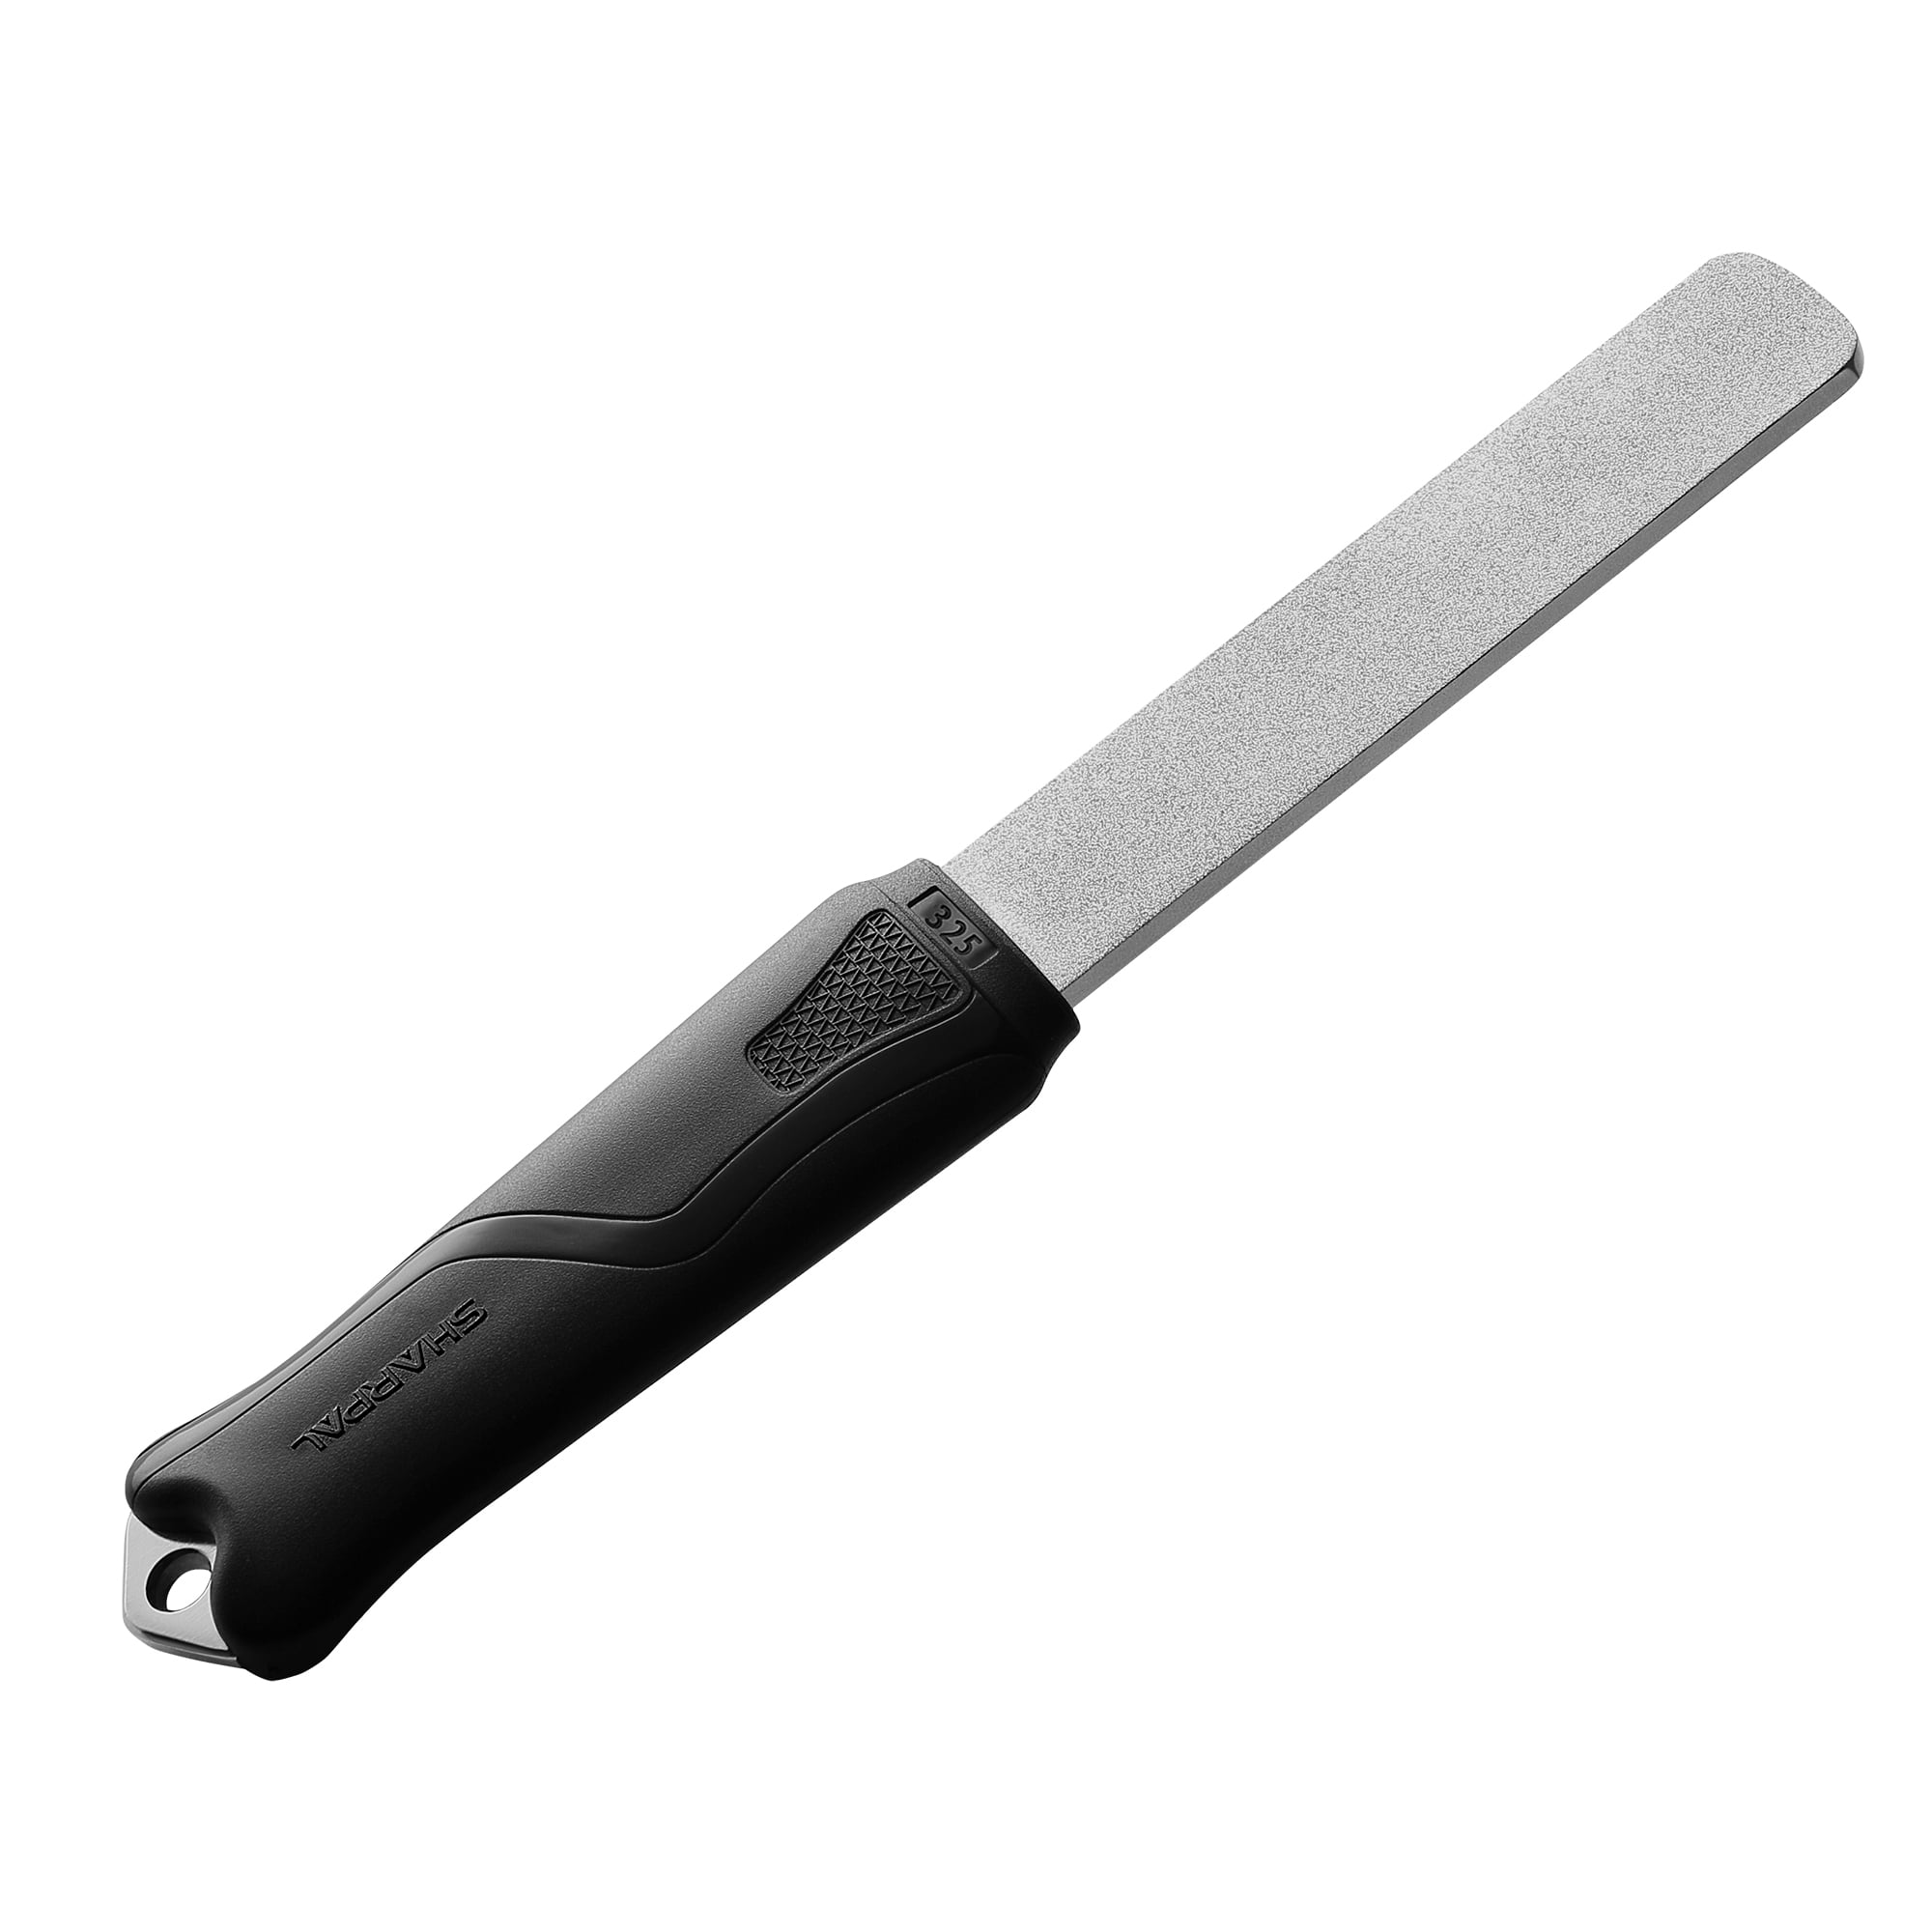 Aovemt knife sharpener, Adjustable Sharpening Angle, Polishing,  Diamond-Coated Ceramic Sharpening Stones for Knife Sharpening, Leather  Strop Bottom